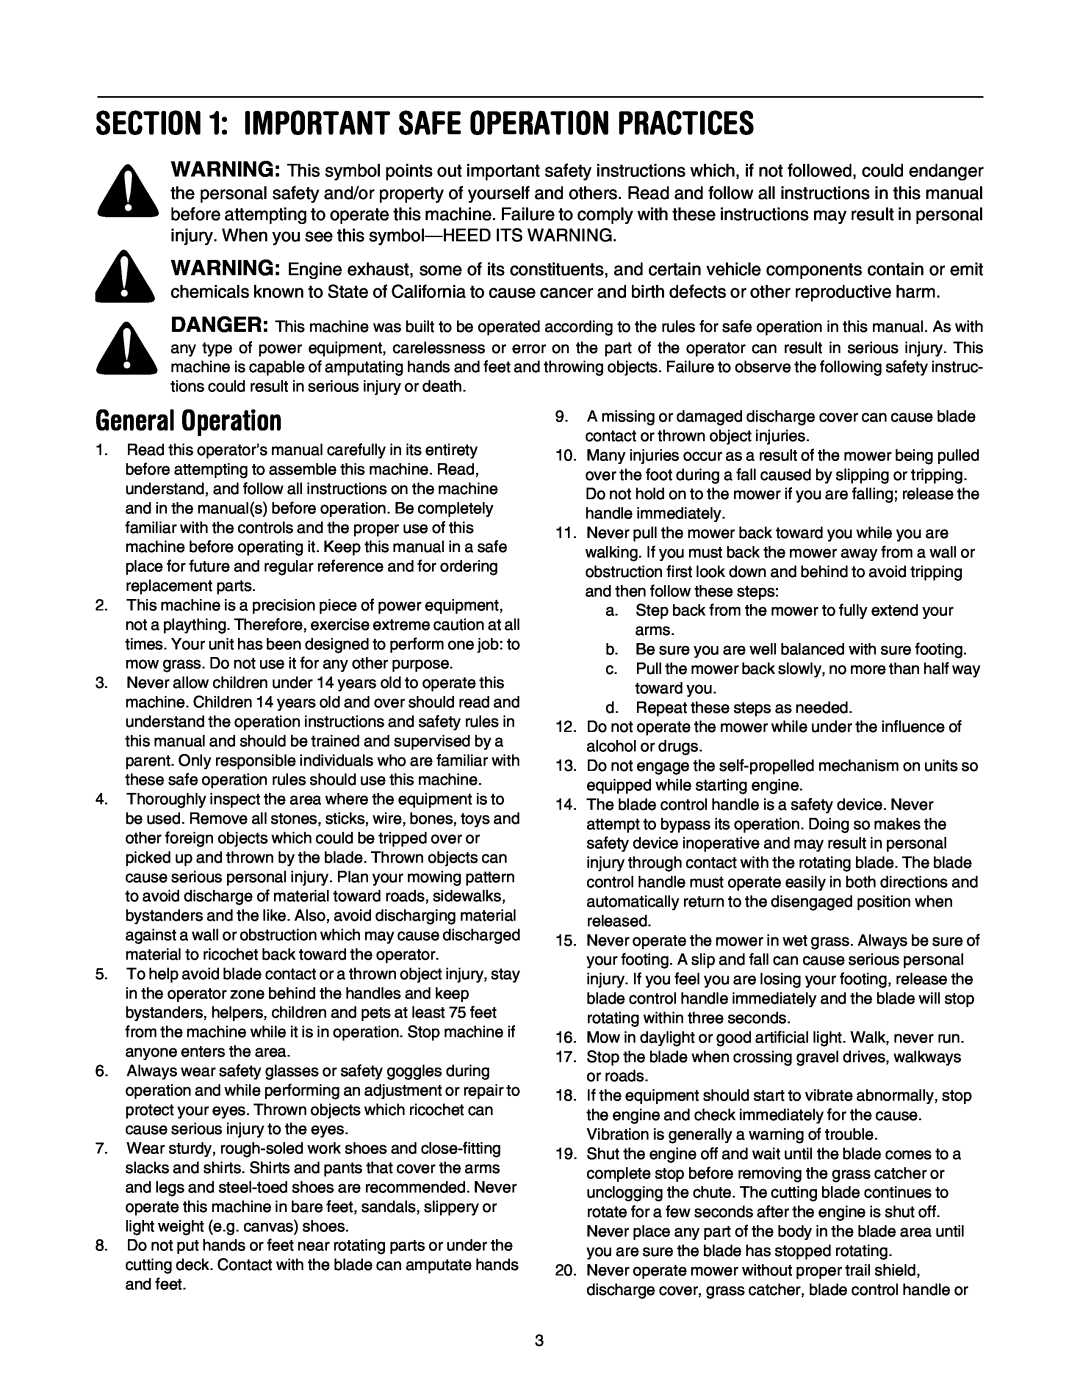 Troy-Bilt TRU CUT 100 manual Important Safe Operation Practices, General Operation 